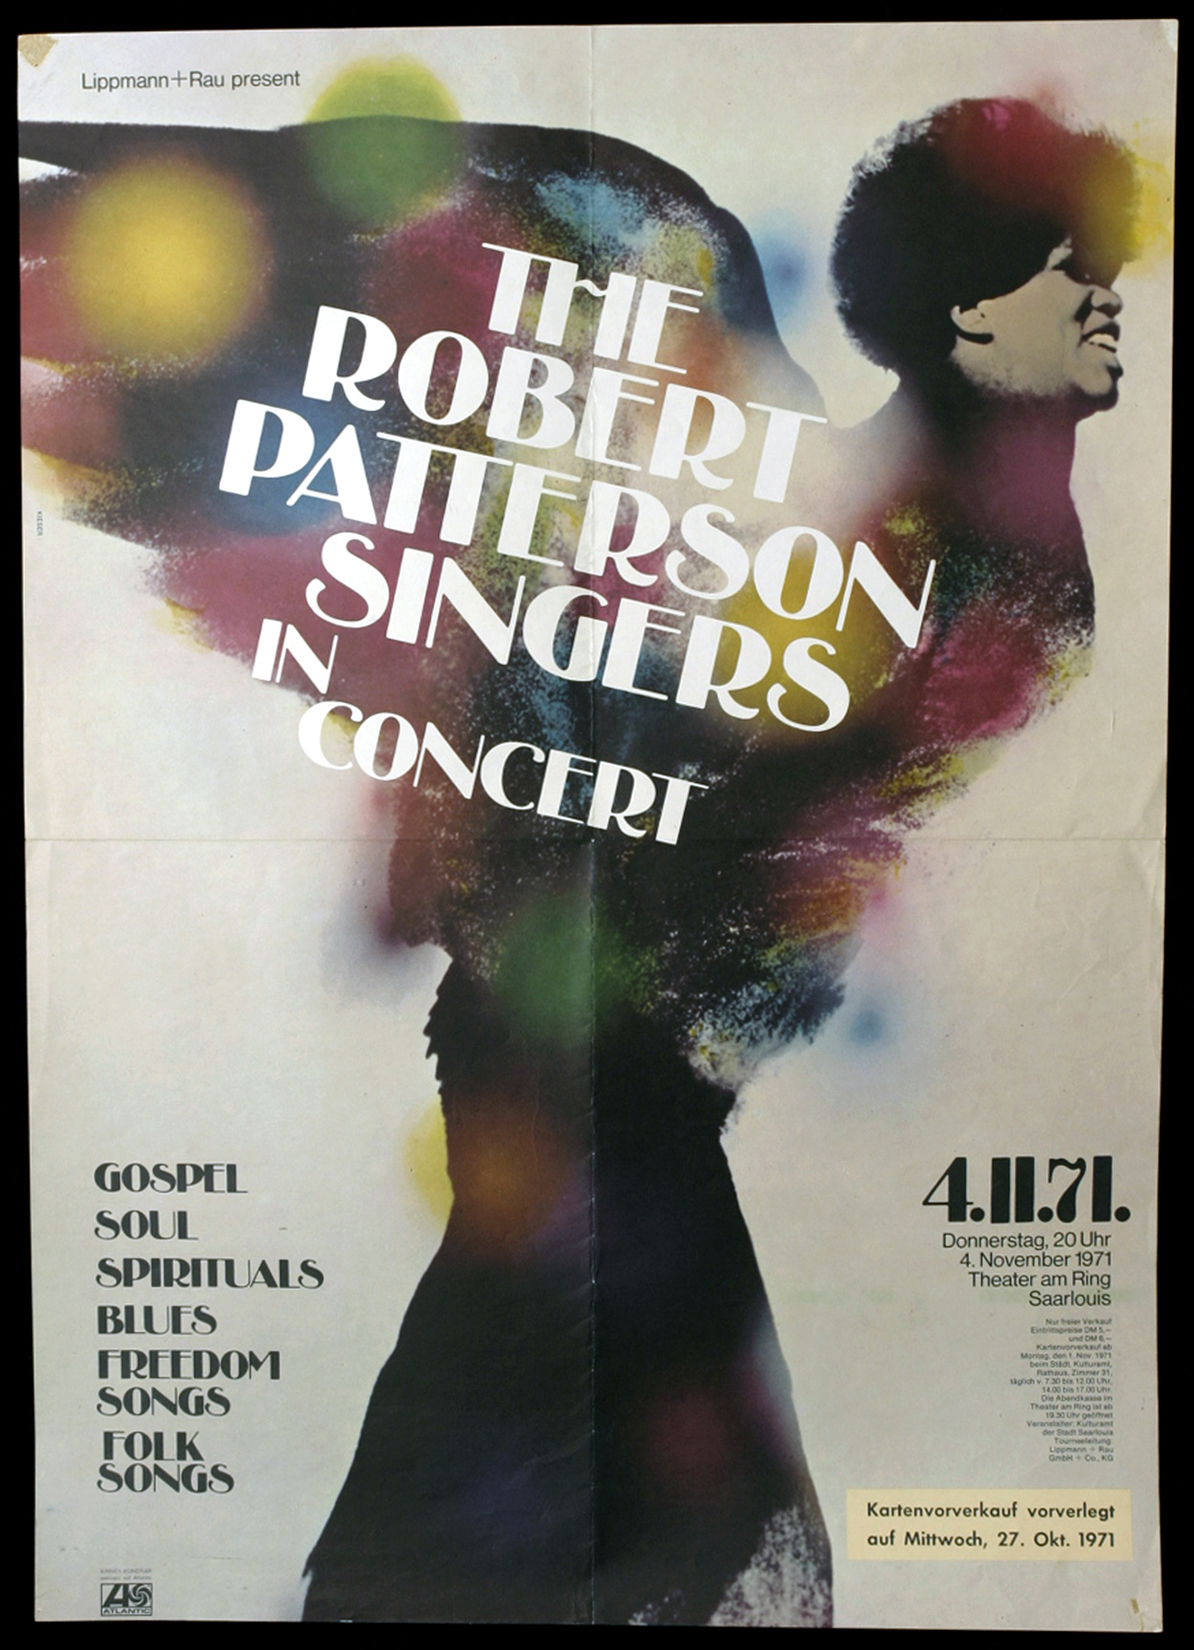 Robert Patterson Singers